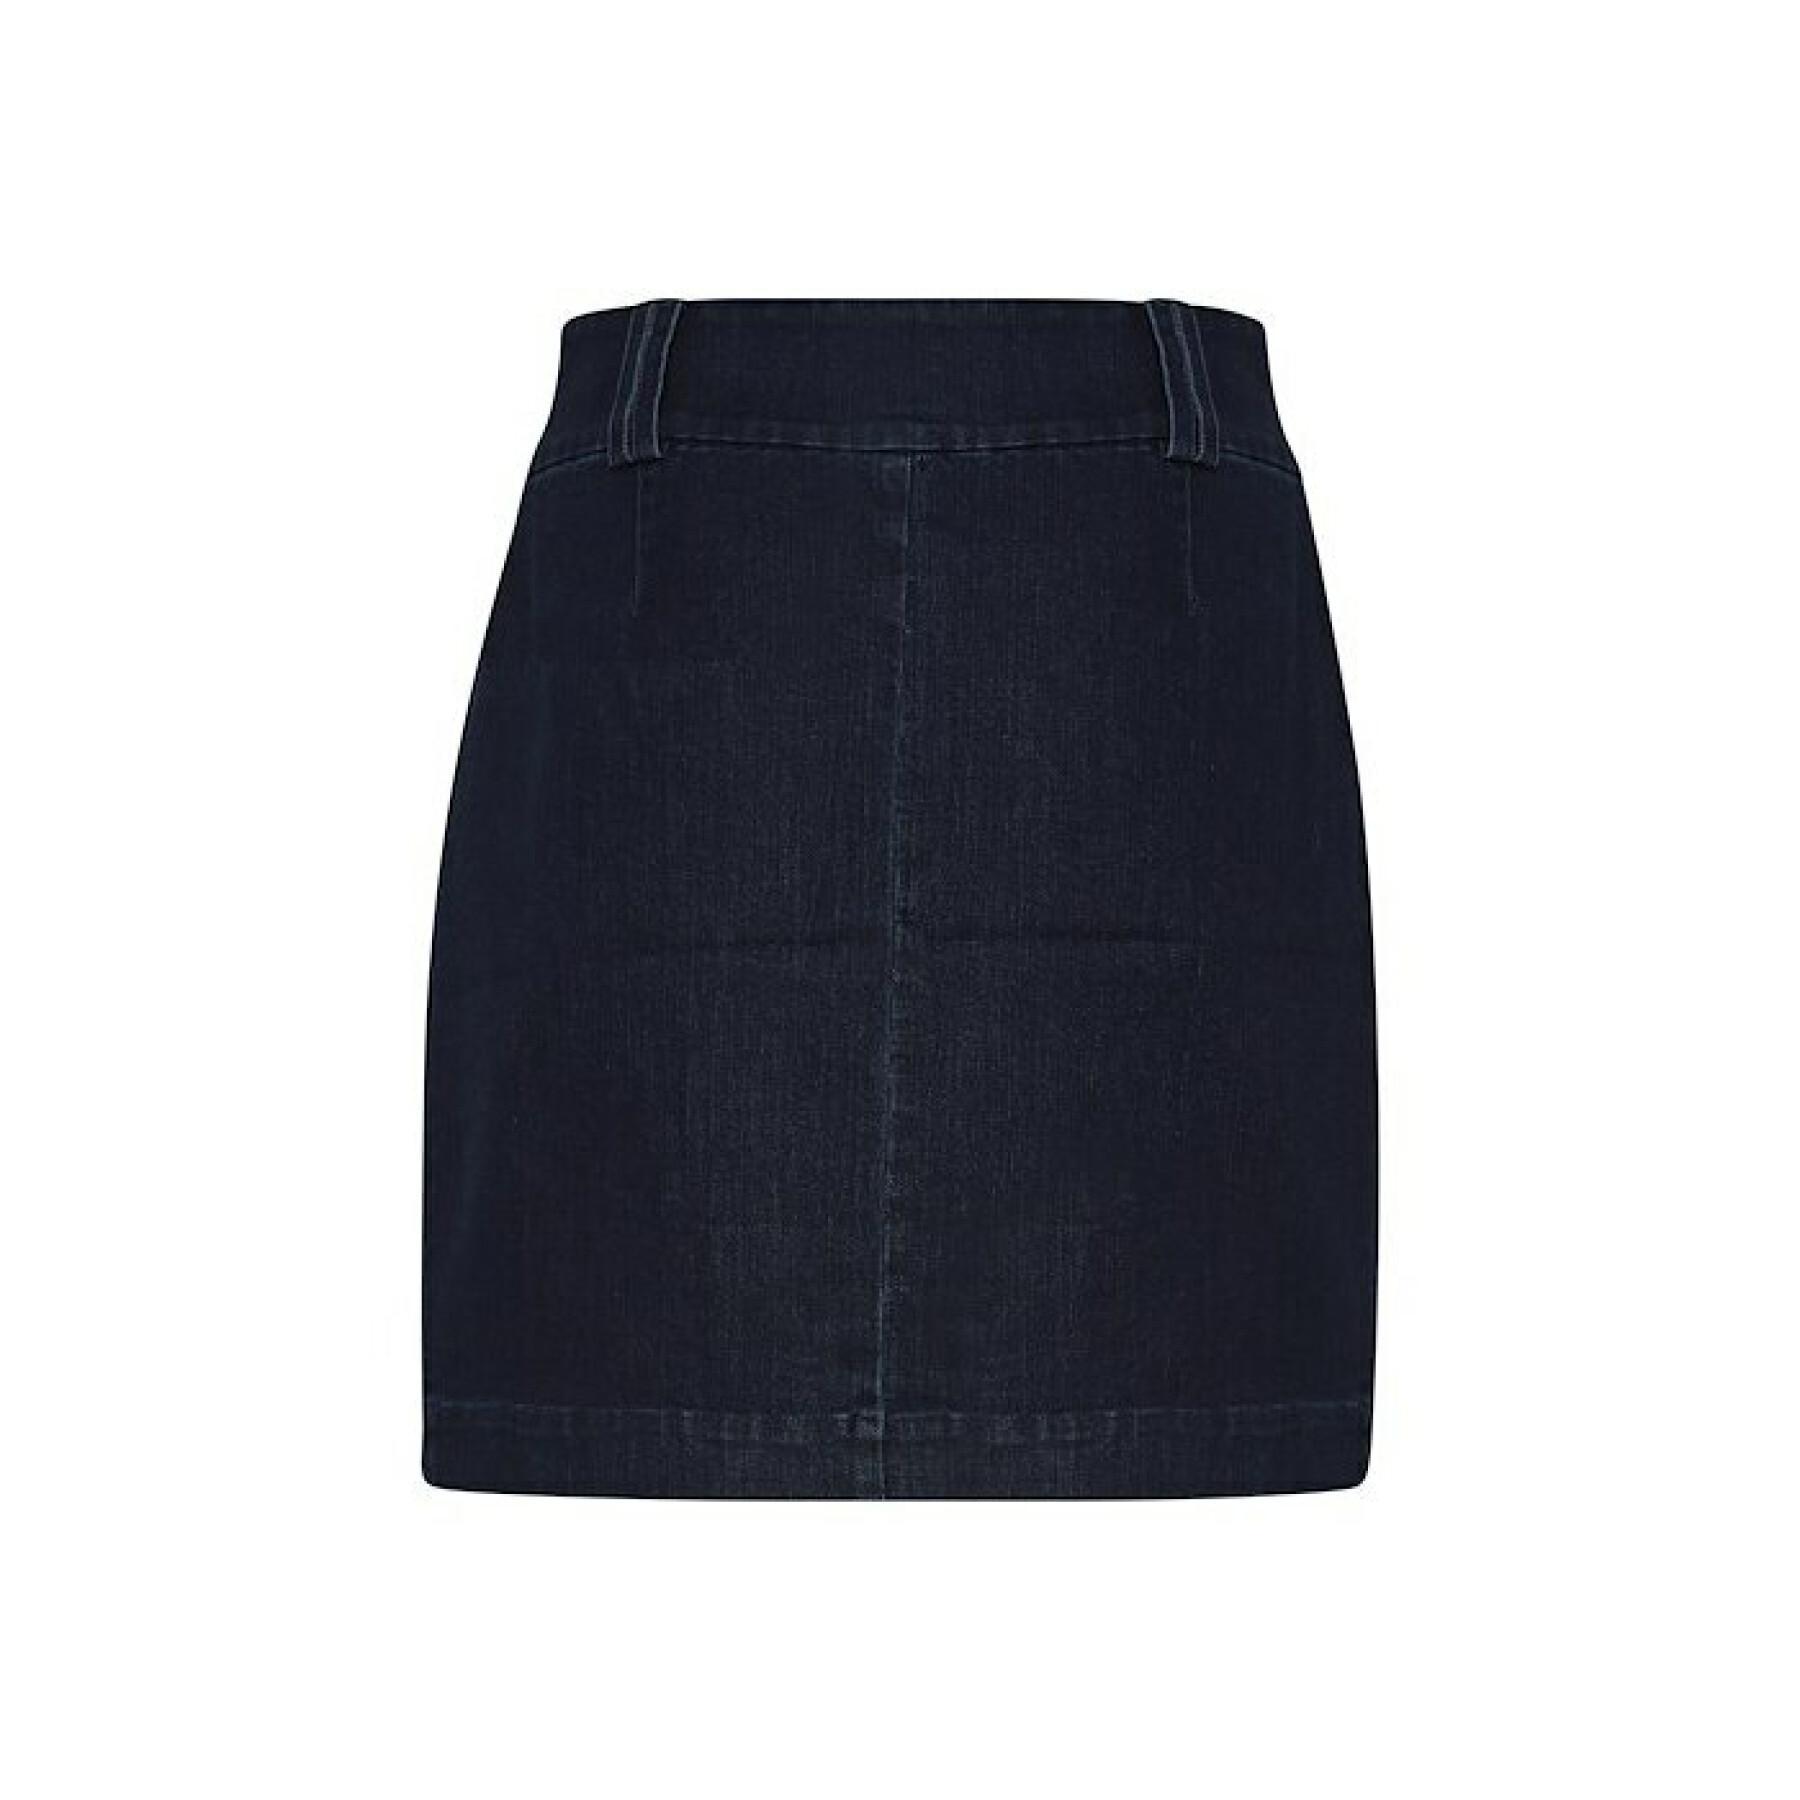 Short denim skirt buttoned in front of woman Atelier Rêve Irloisa